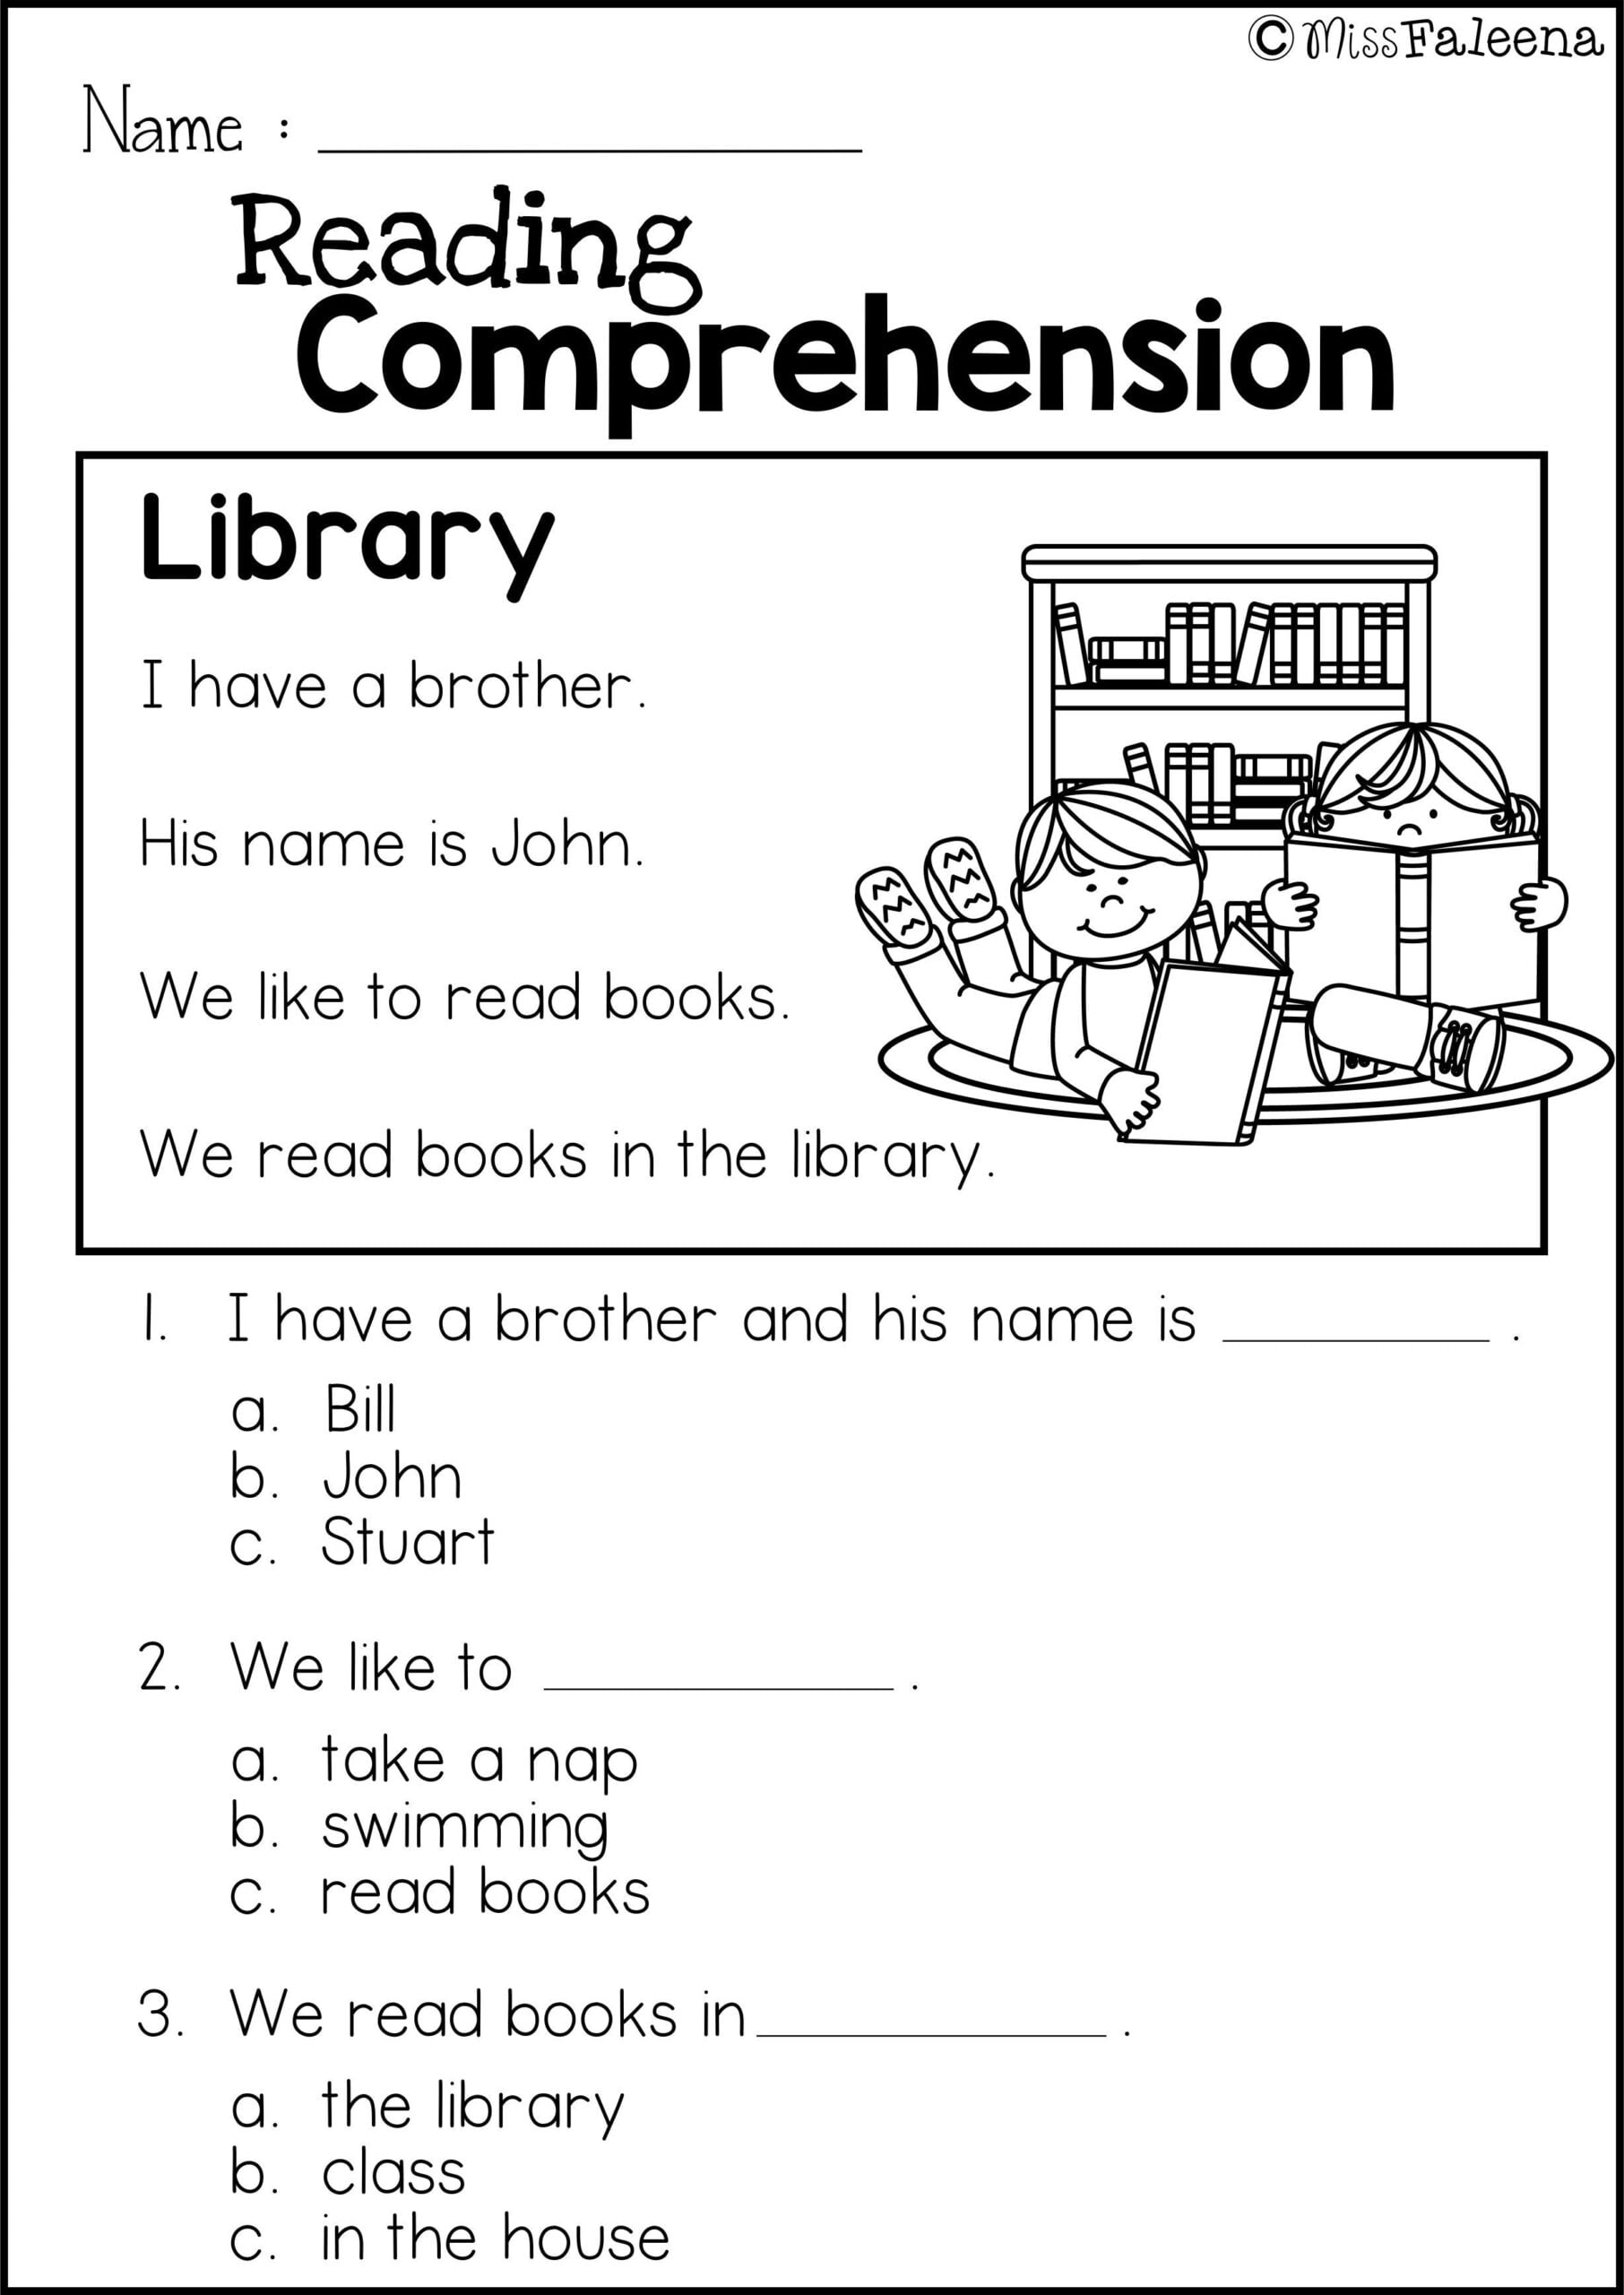 Reading Comprehension Free Worksheets For 1st Grade